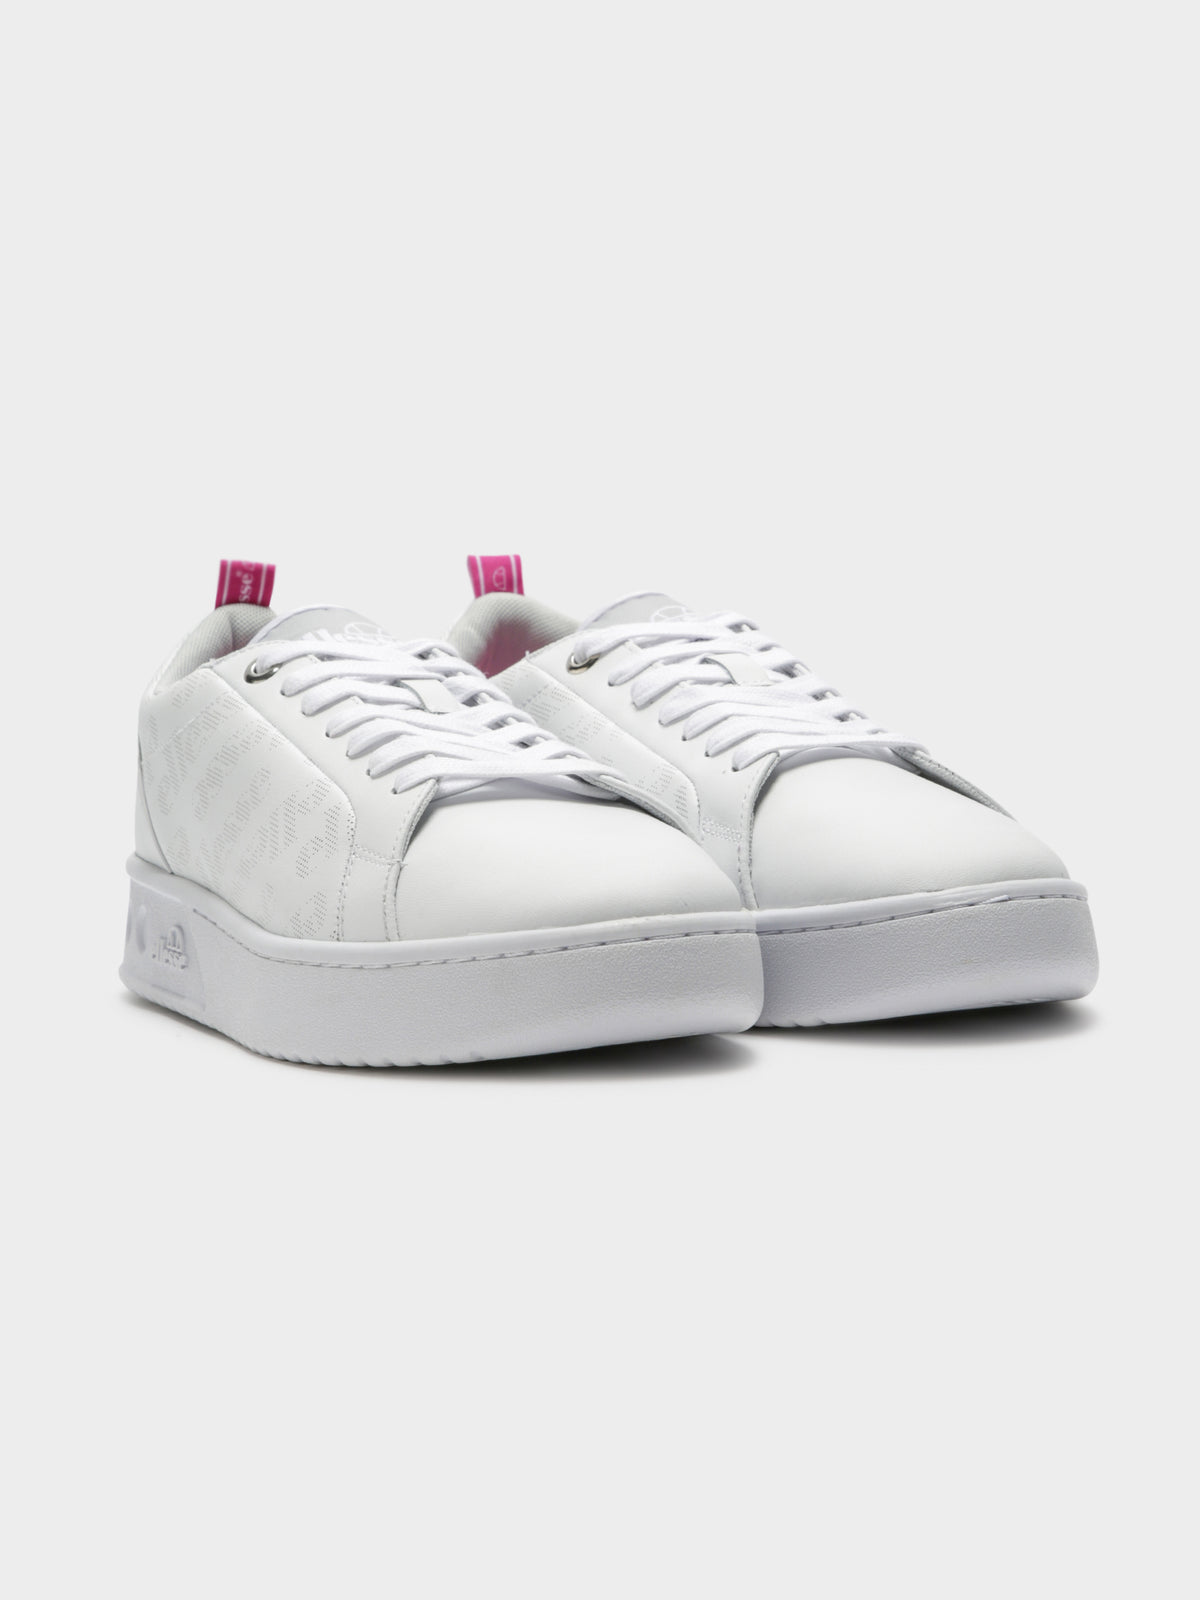 Womens Mezzaluna Sneakers in White